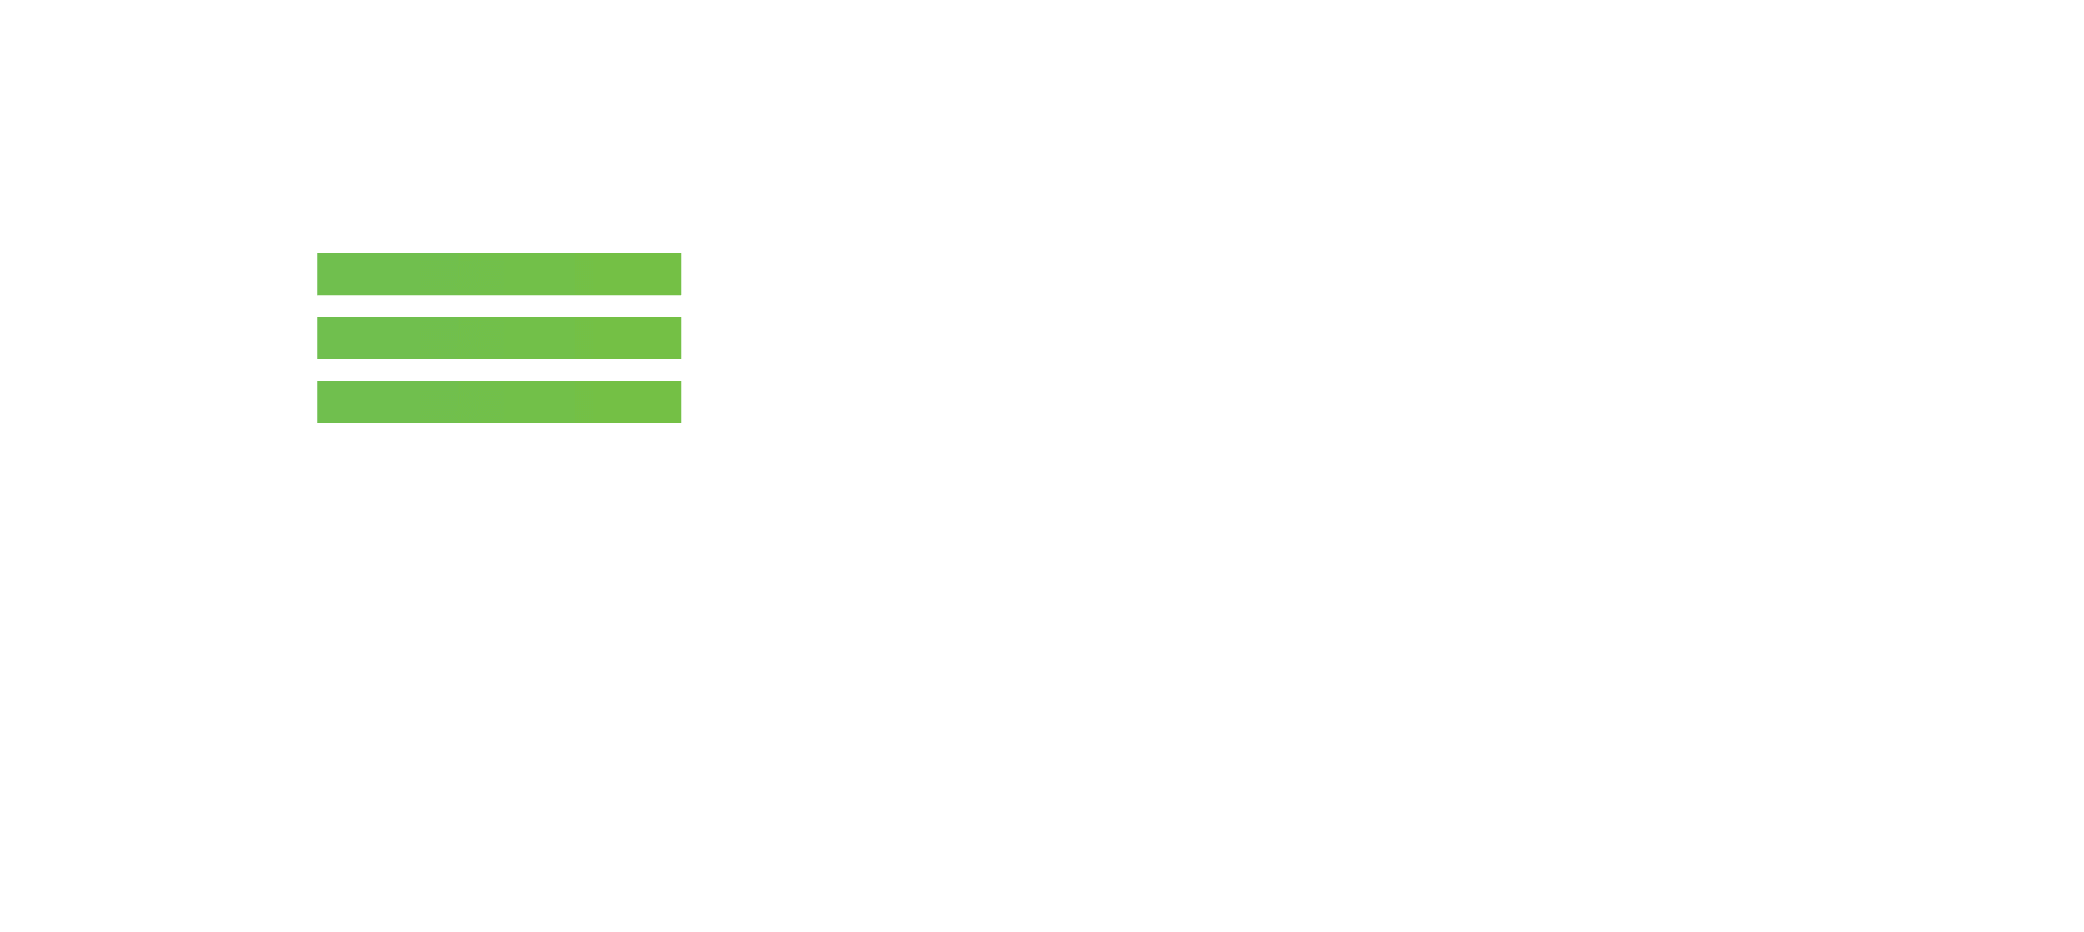 Elevate Sports Lab - Primary Logo